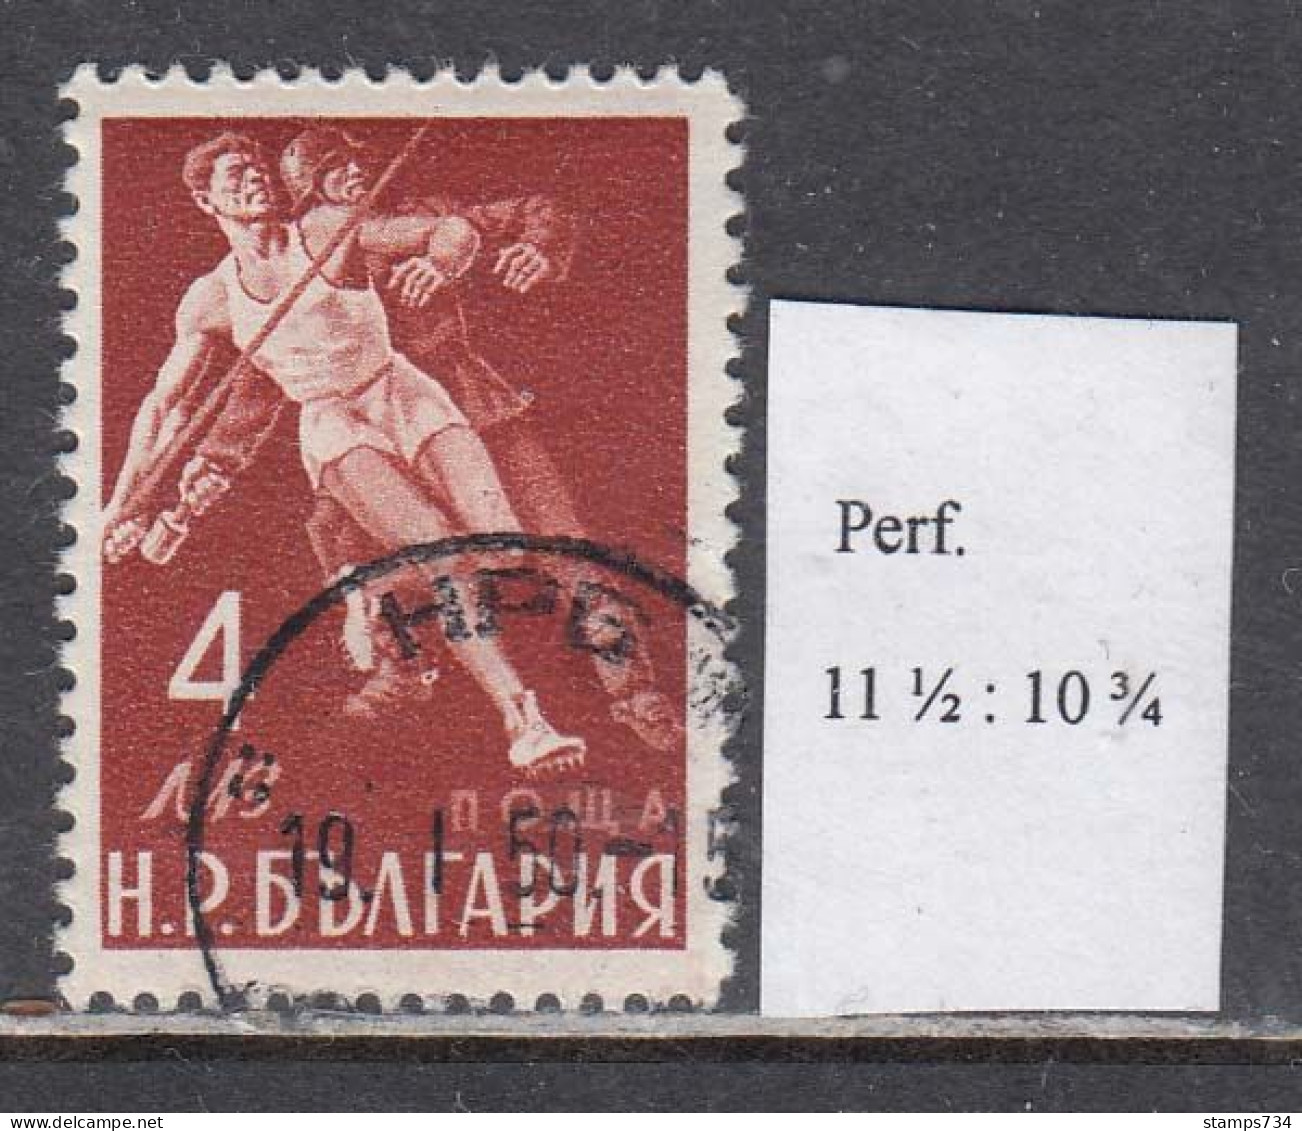 Bulgaria 1949 - Sport 4 Lev, Mi-Nr. 704, Rare Preforation 11 1/2: 10 3/4, Used - Gebruikt